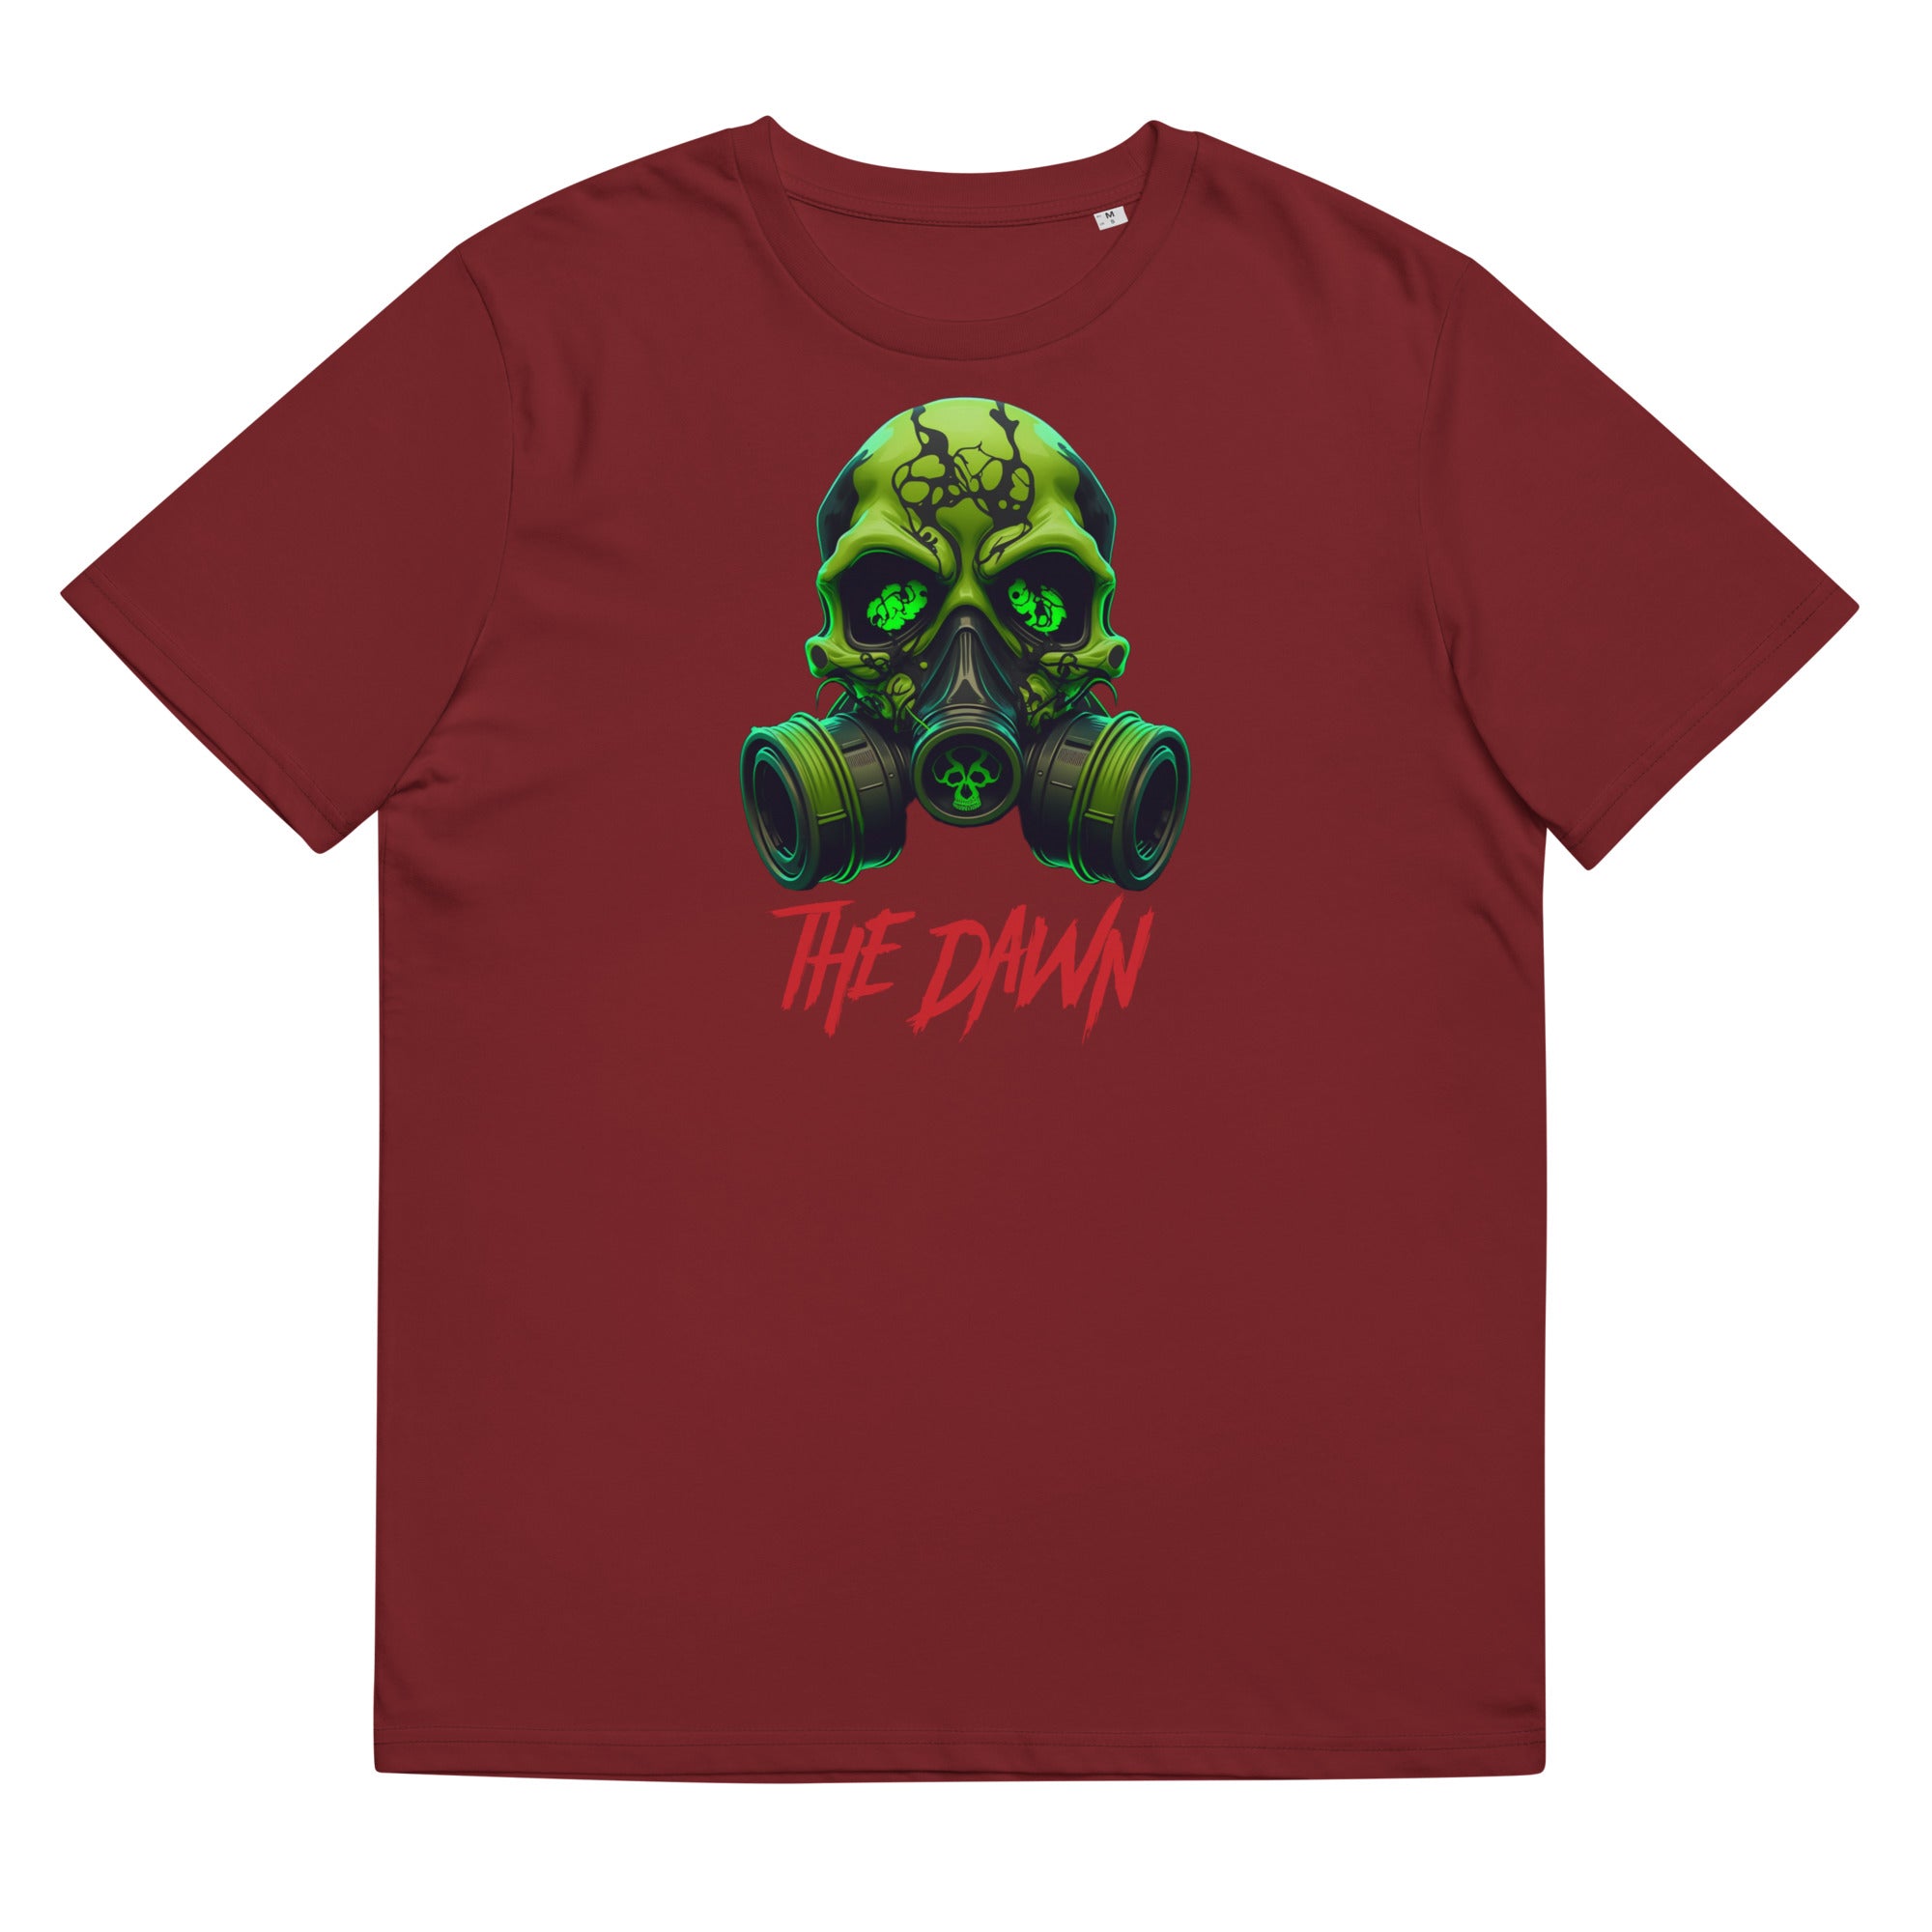 The Dawn - Organic Cotton T-shirt